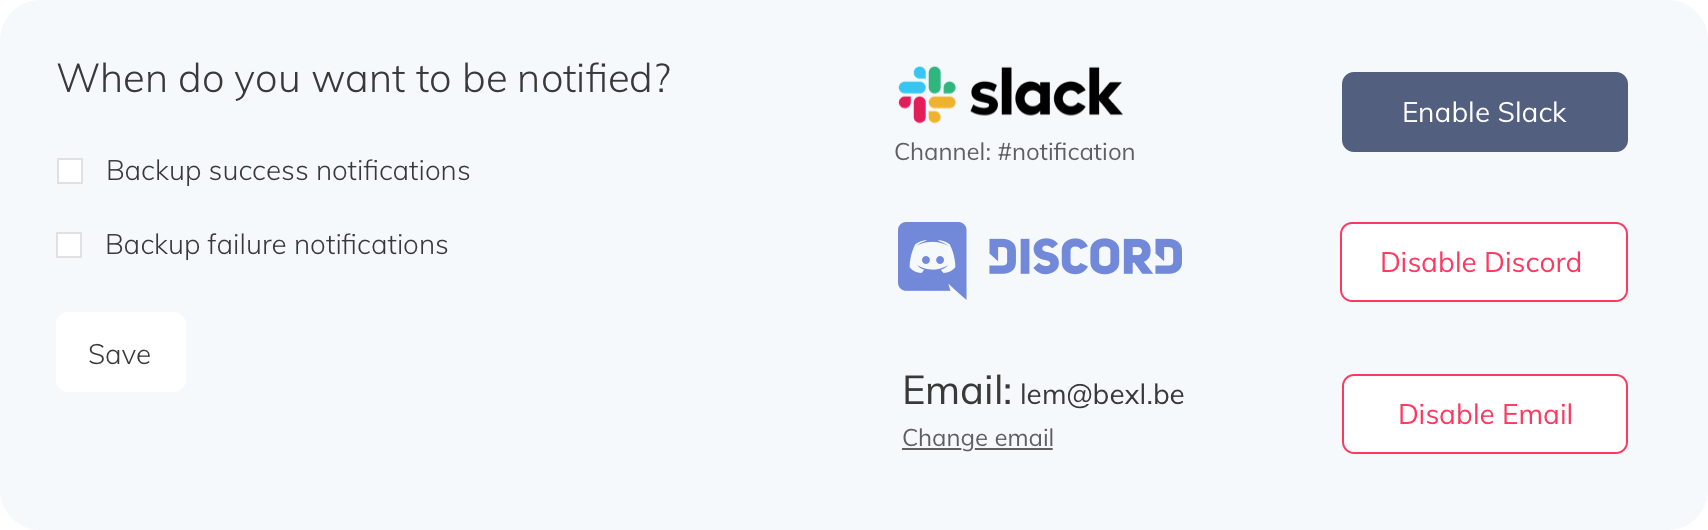 SimpleBackups slack and discord notifications for backup